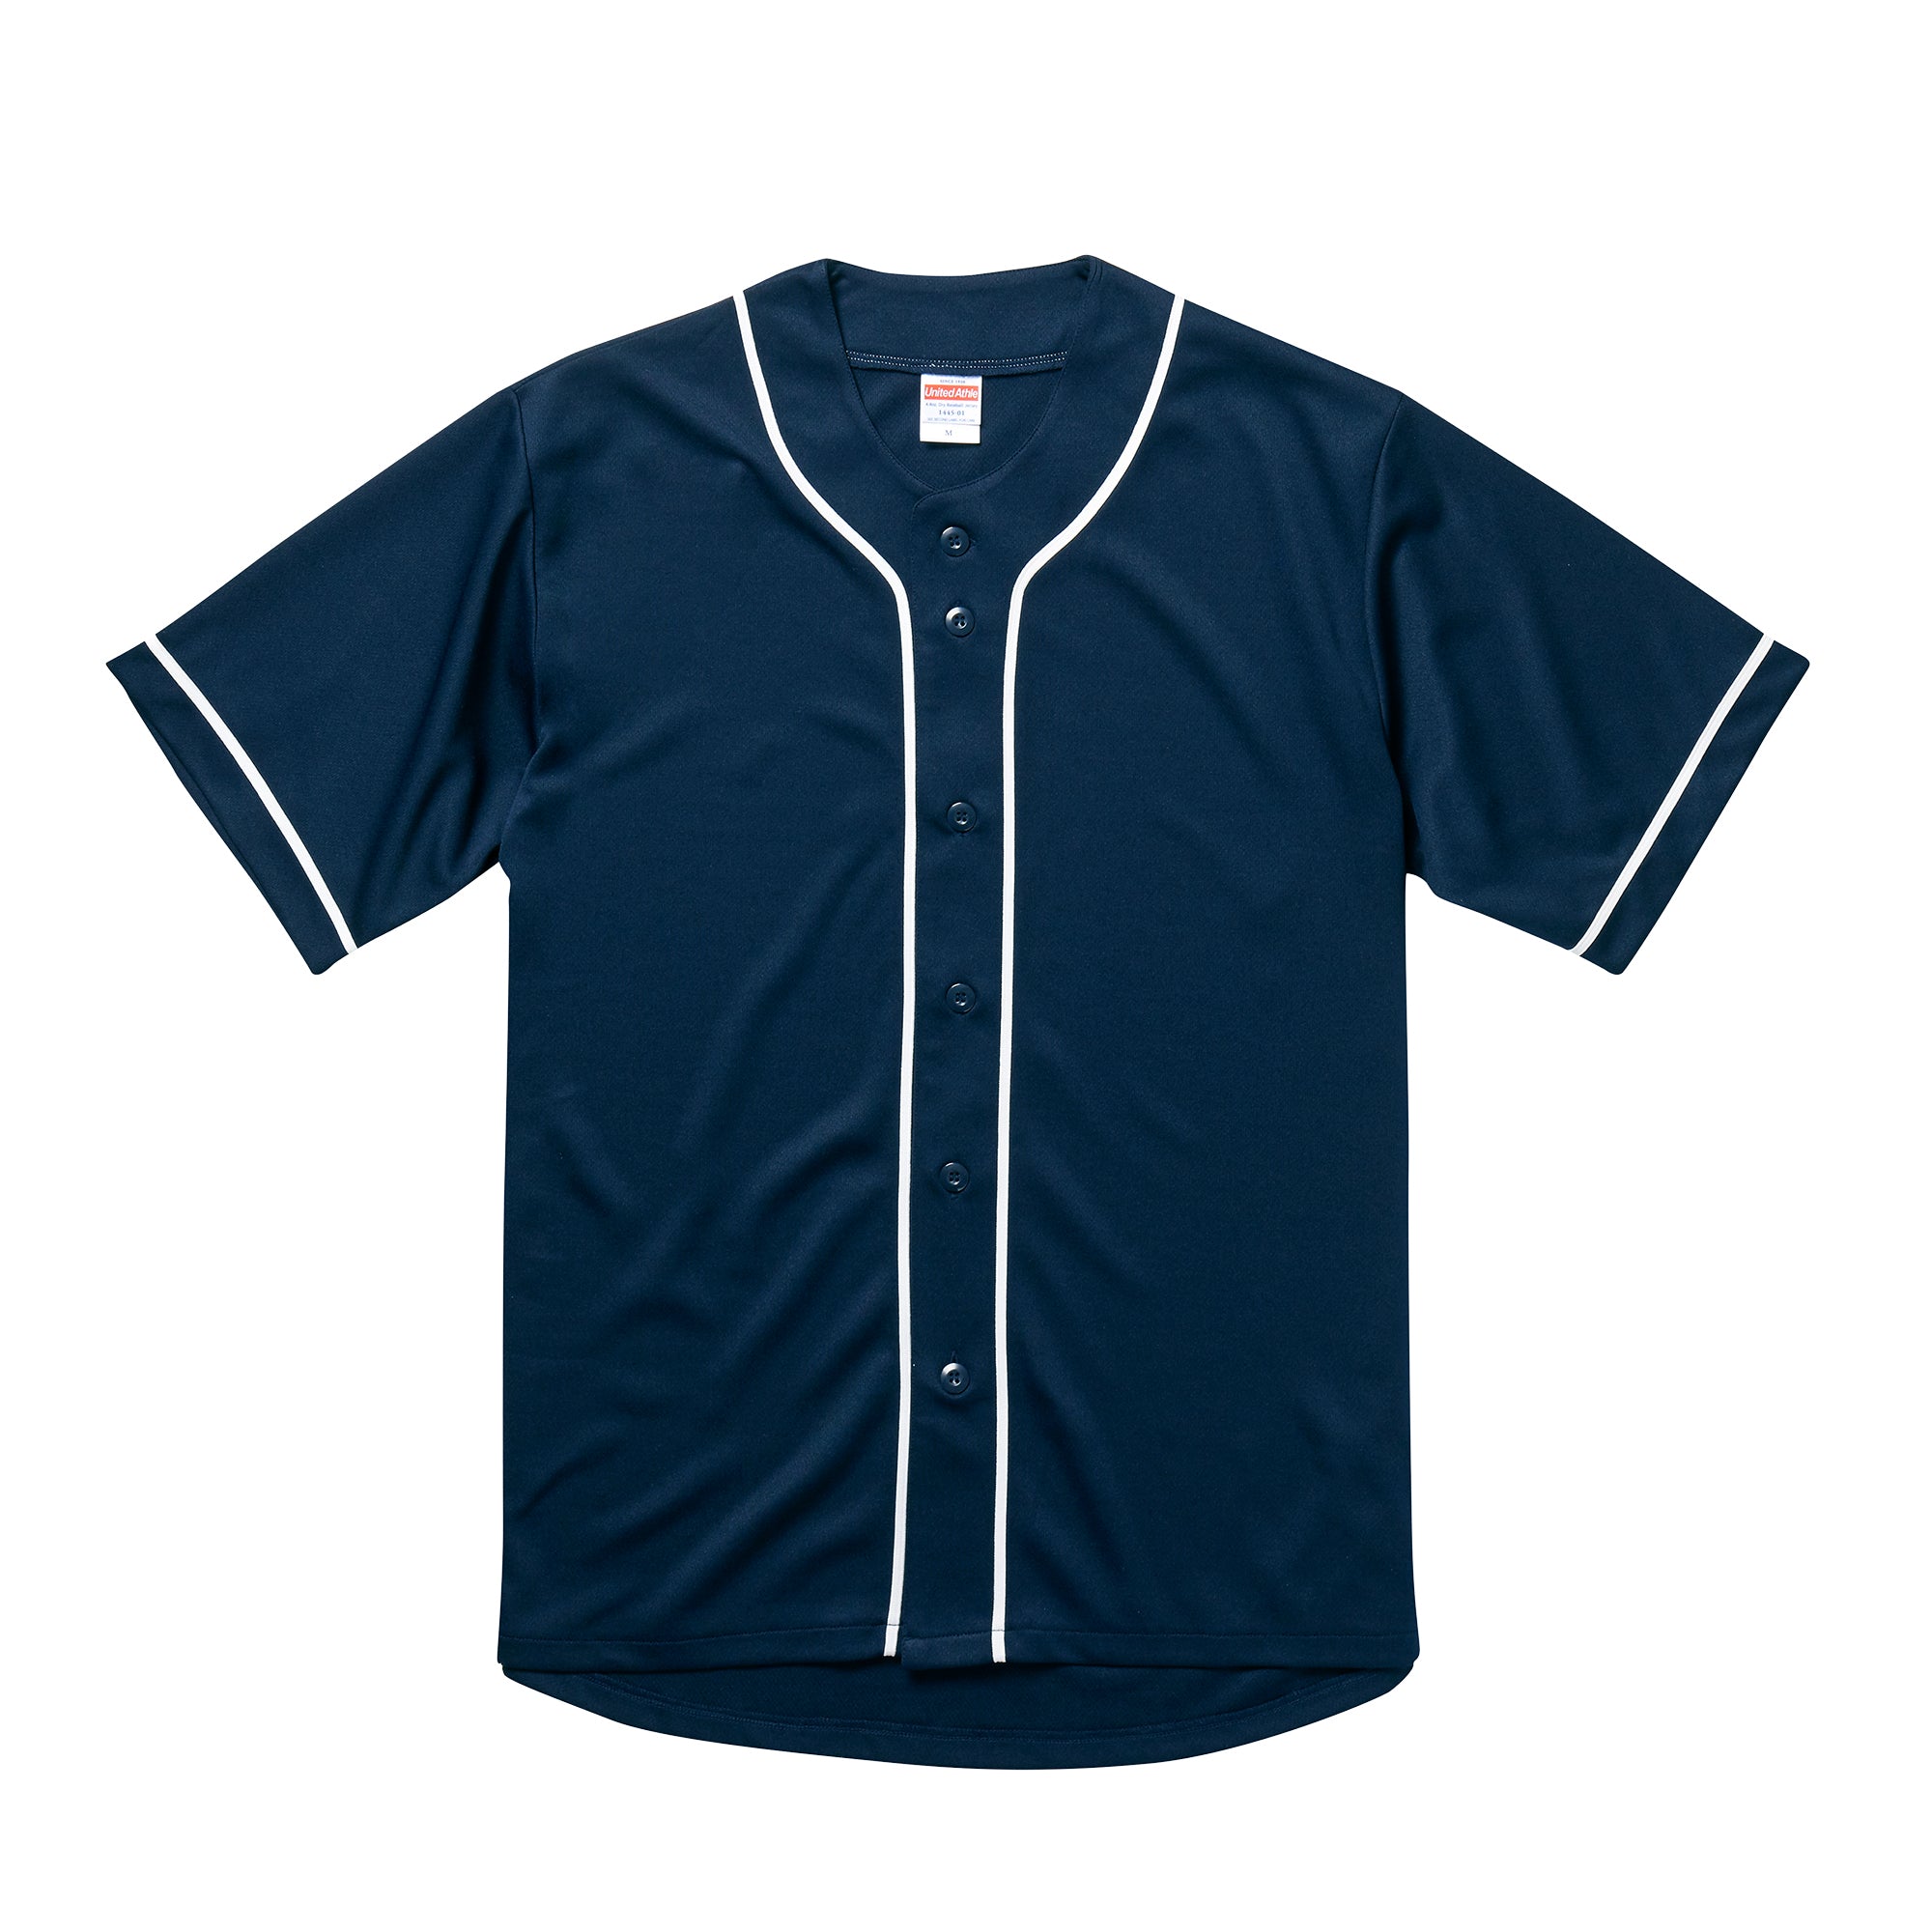 Baseball shirt - Navy White